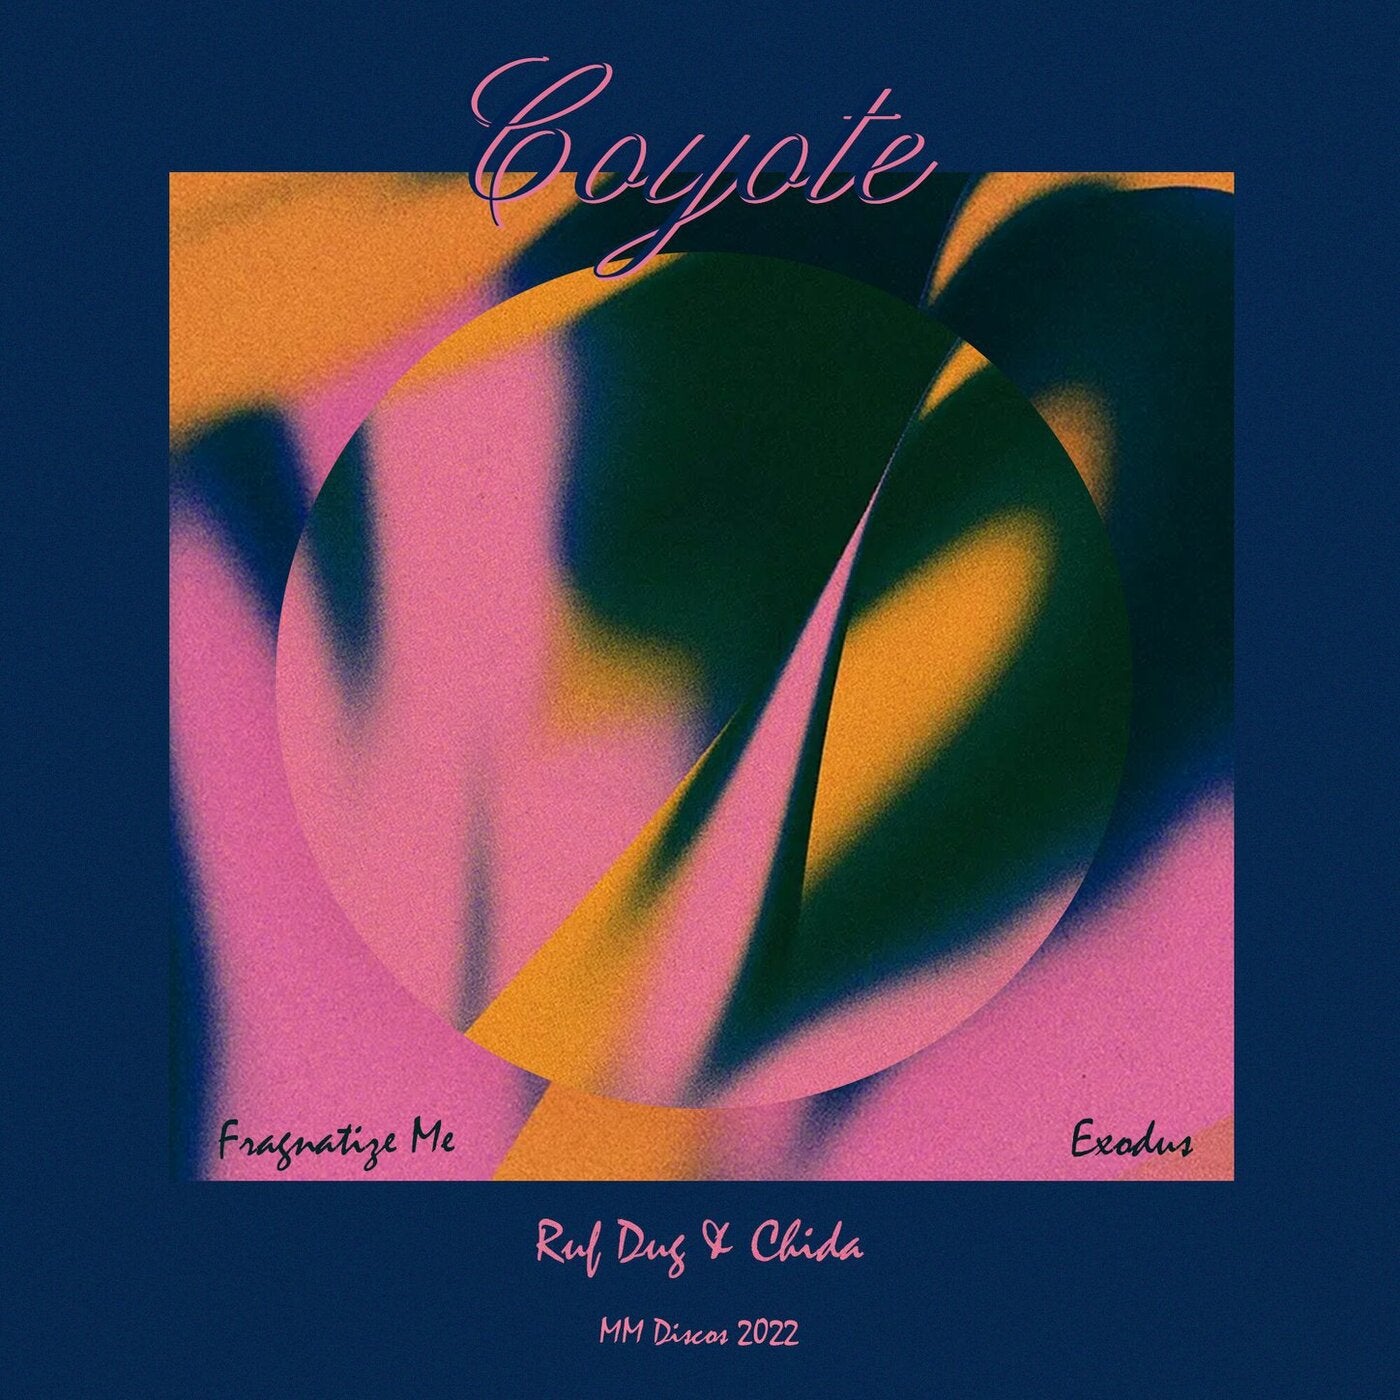 Coyote - Exodus , Fragnatize Me (Ruf Dug & Chida Remixes) [MMDiscos]